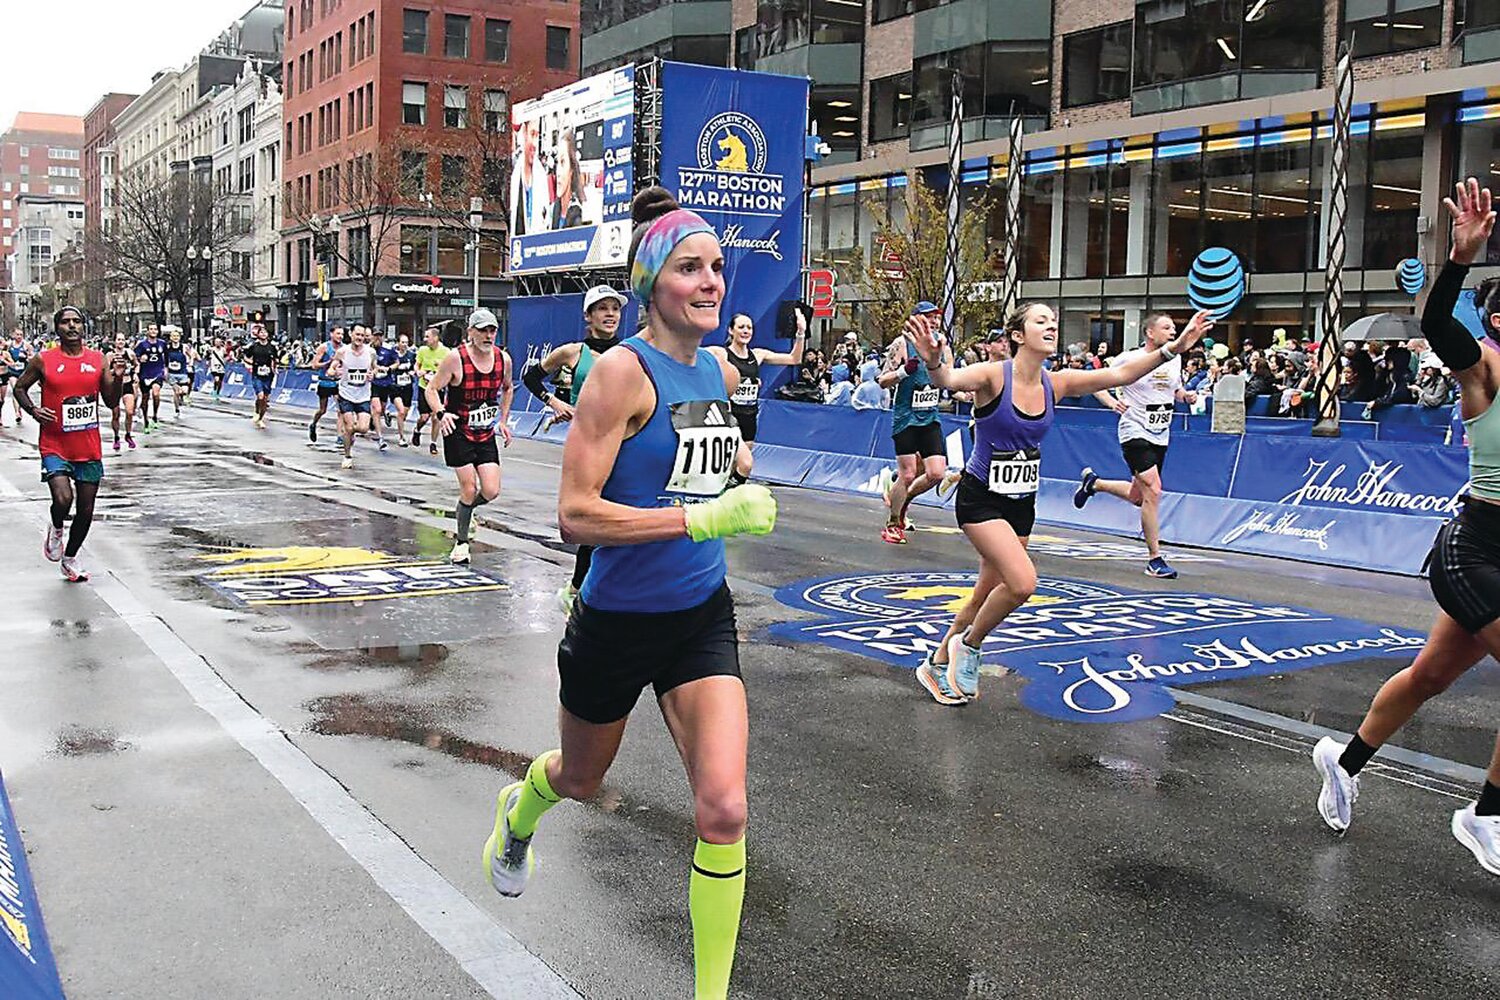 Stephanie Savastano nears the finish line of the April 17 Boston Marathon. She completed the prestigious race in 3:09.